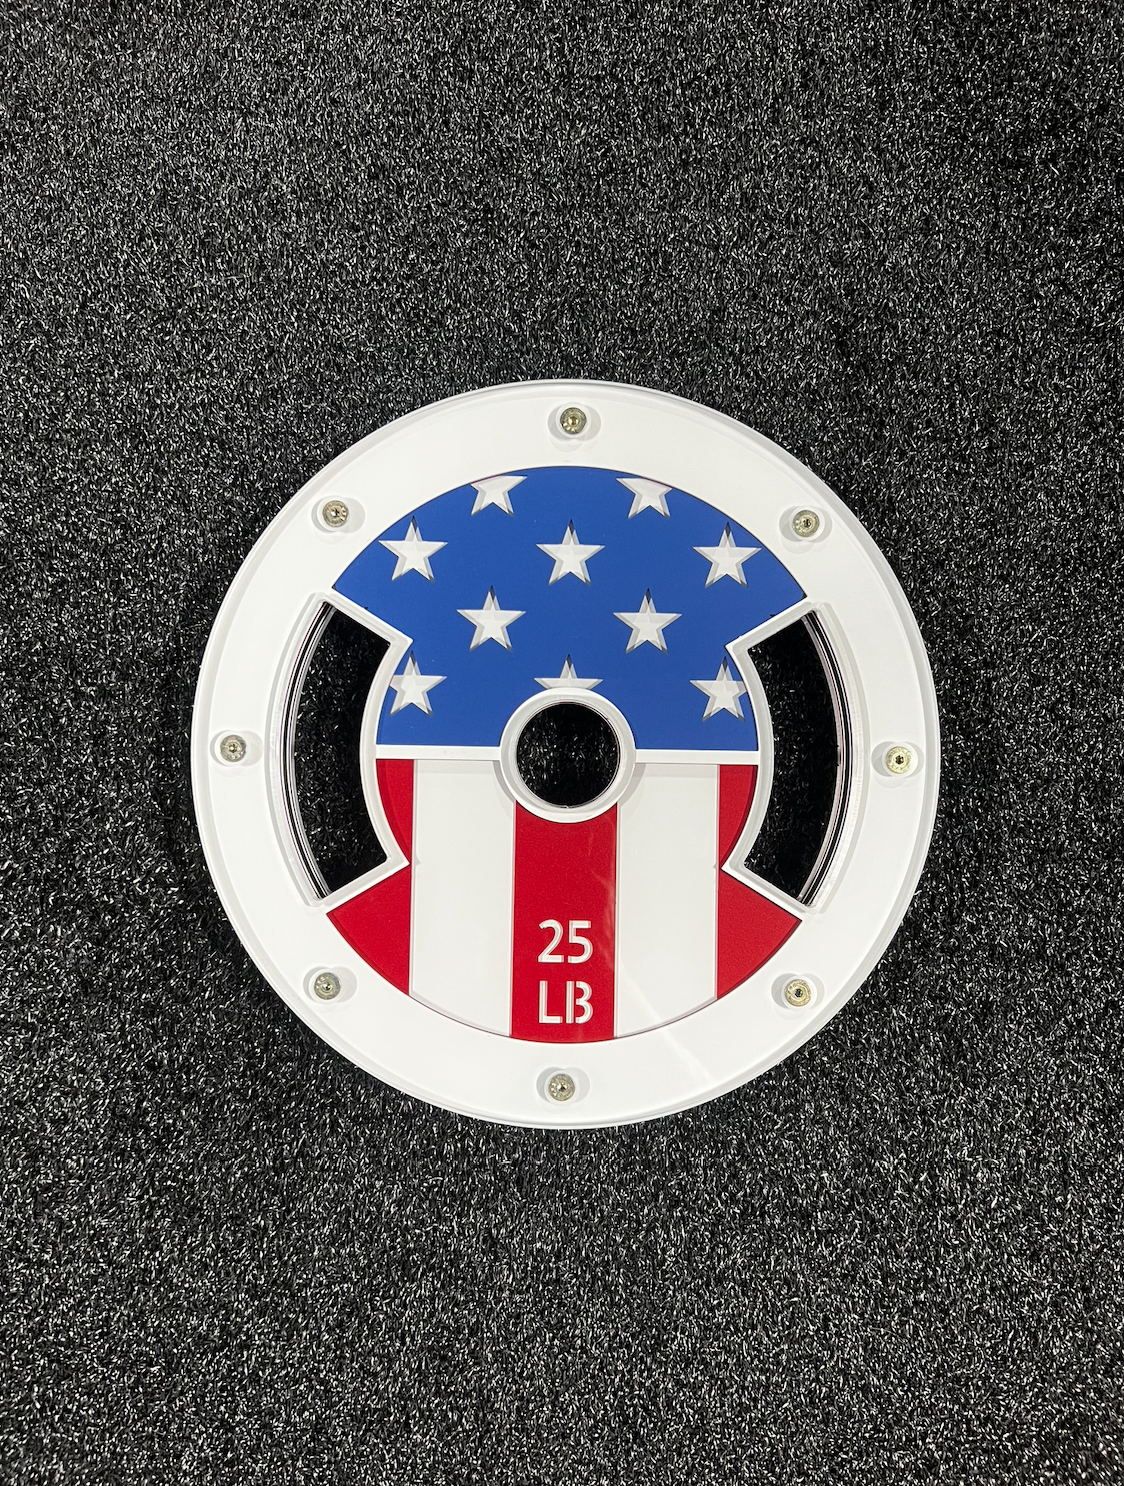 USA Sticker Pack - 1 Raffle Ticket